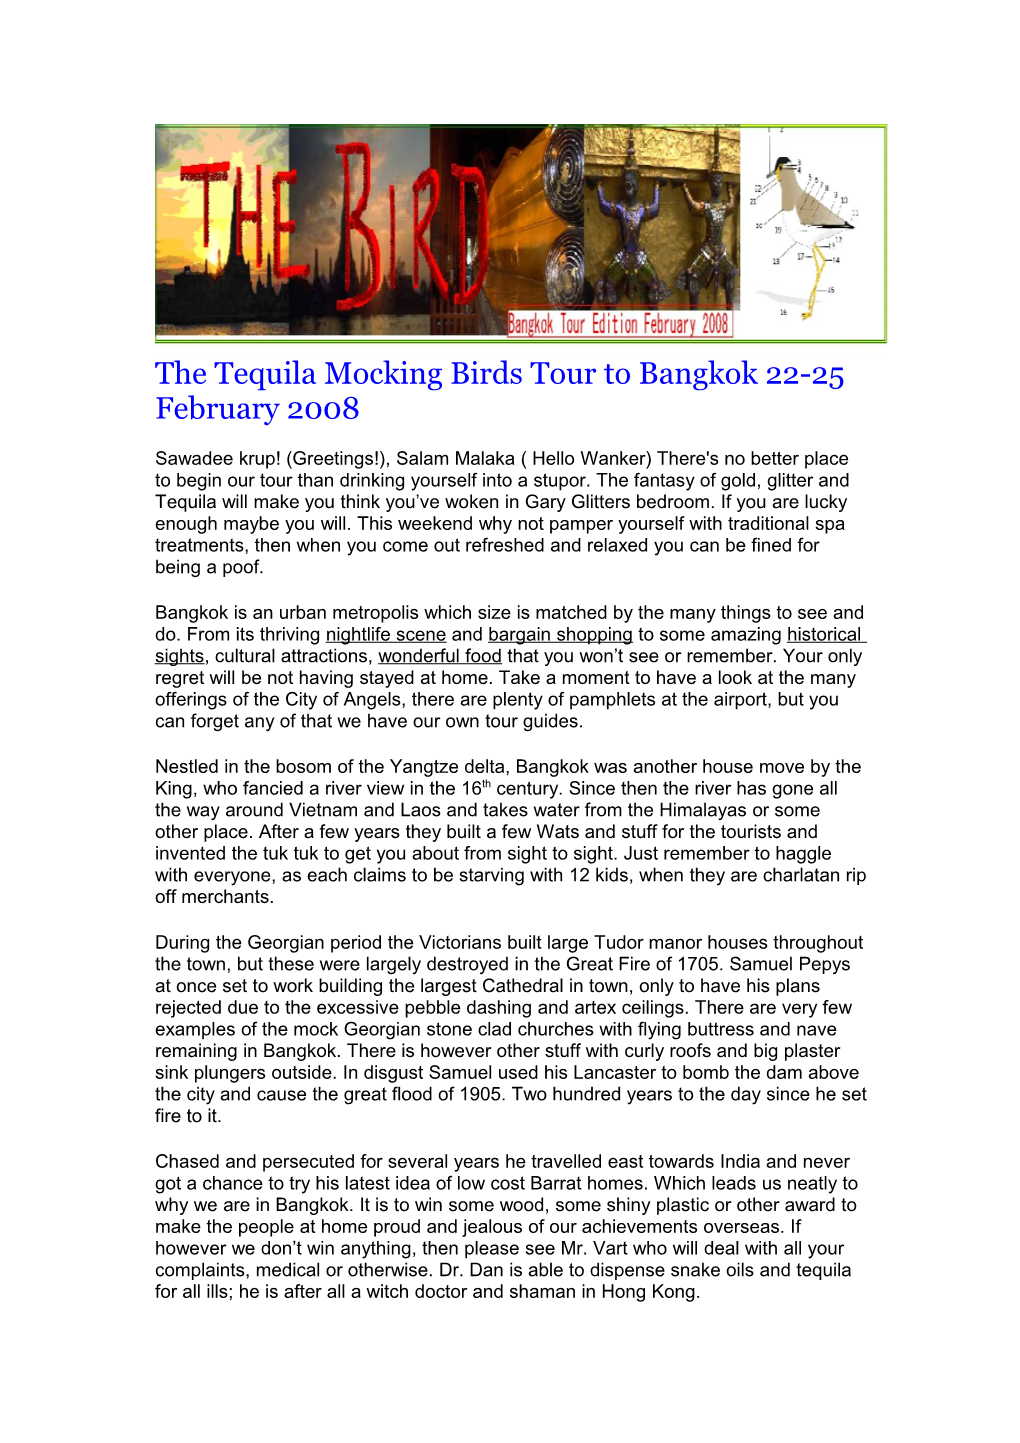 The Tequila Mocking Birds Tour to Bangkok 22-25 February 2008